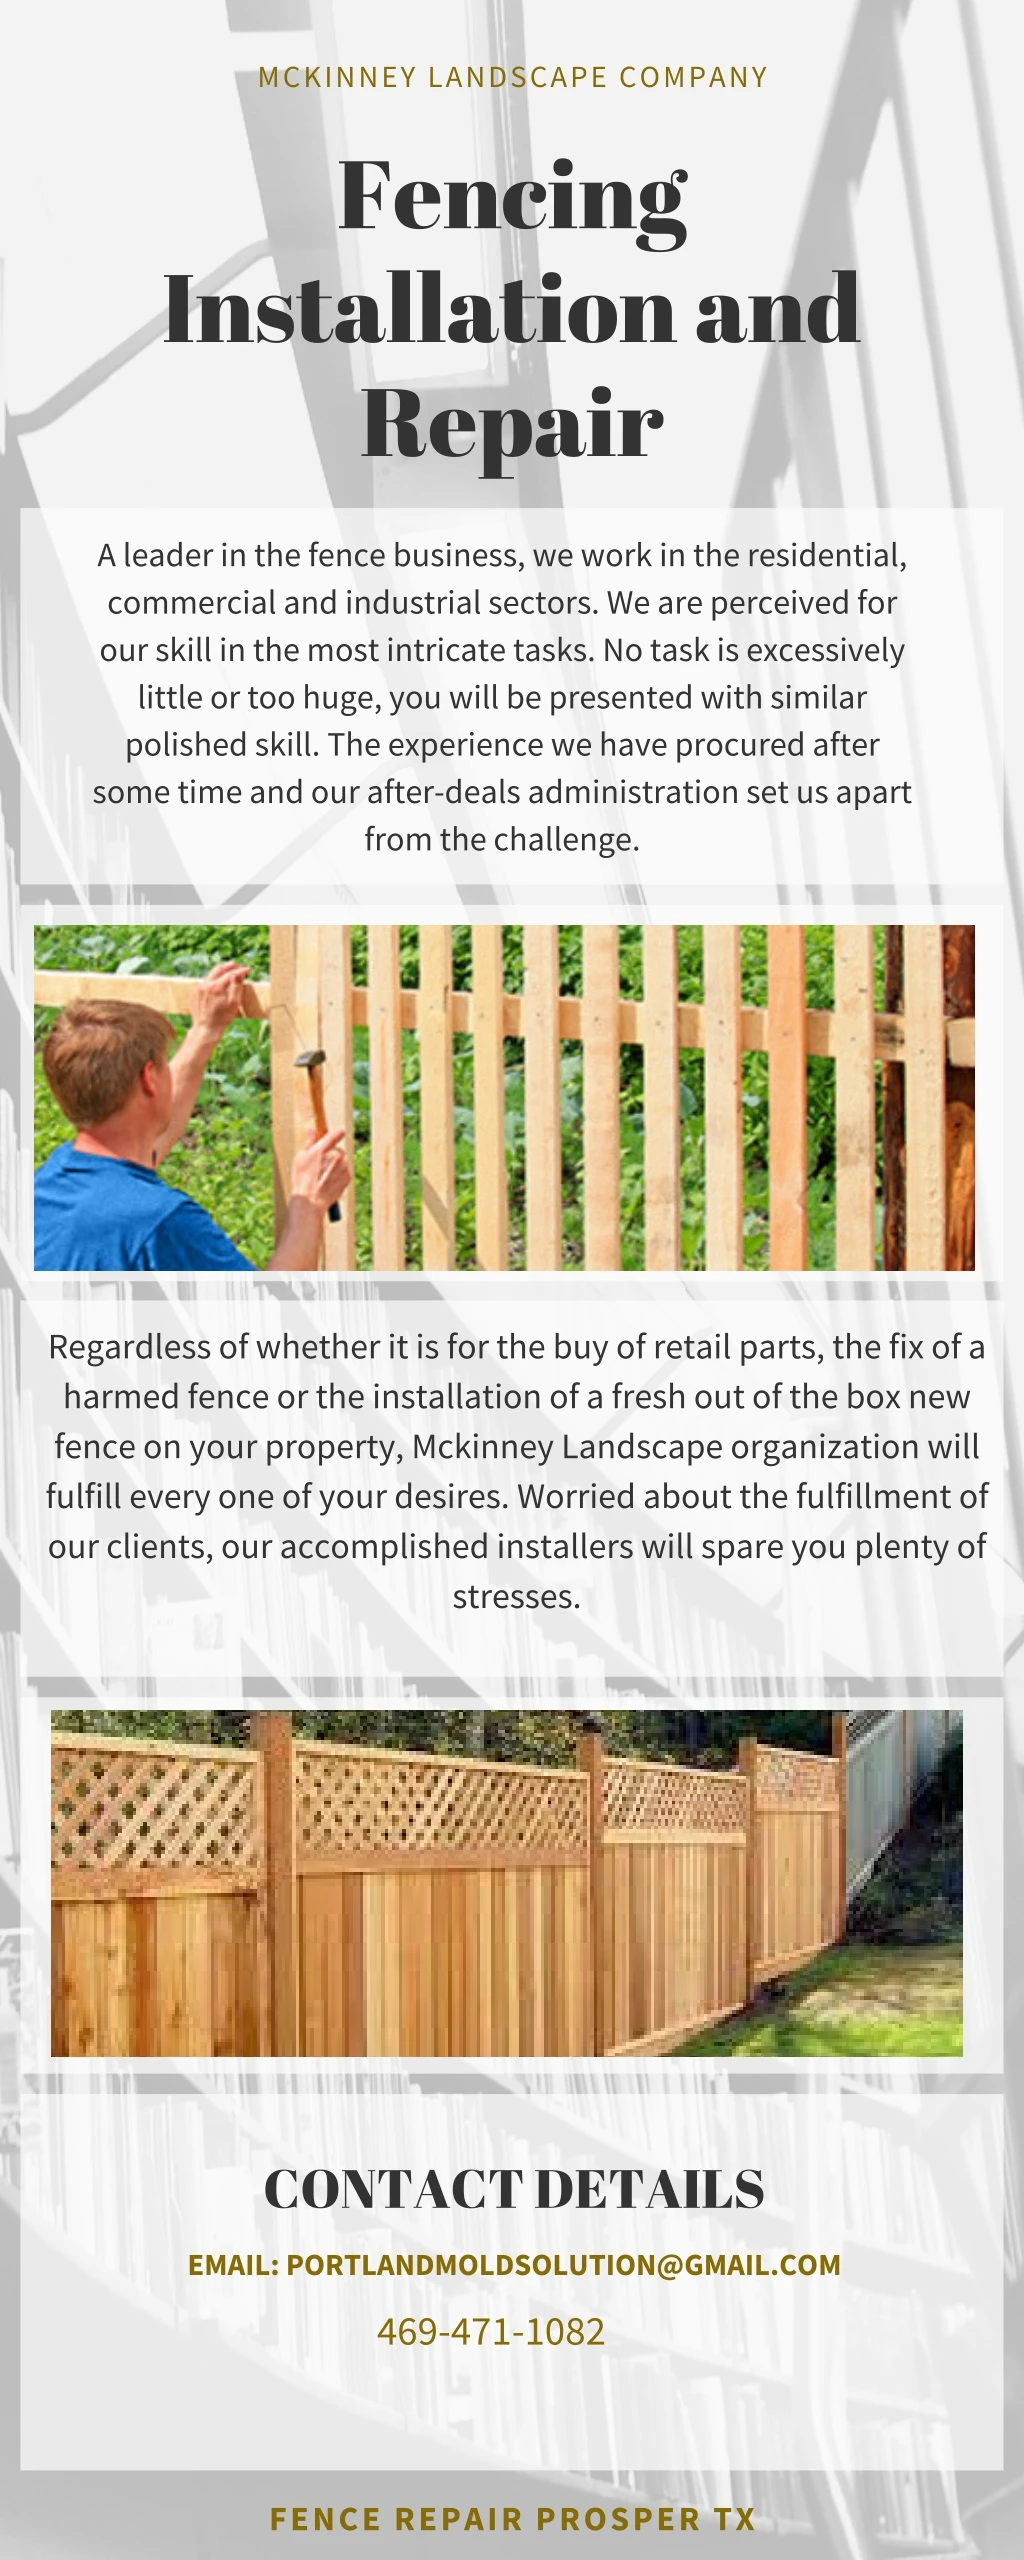 mckinney landscape company fencing installation